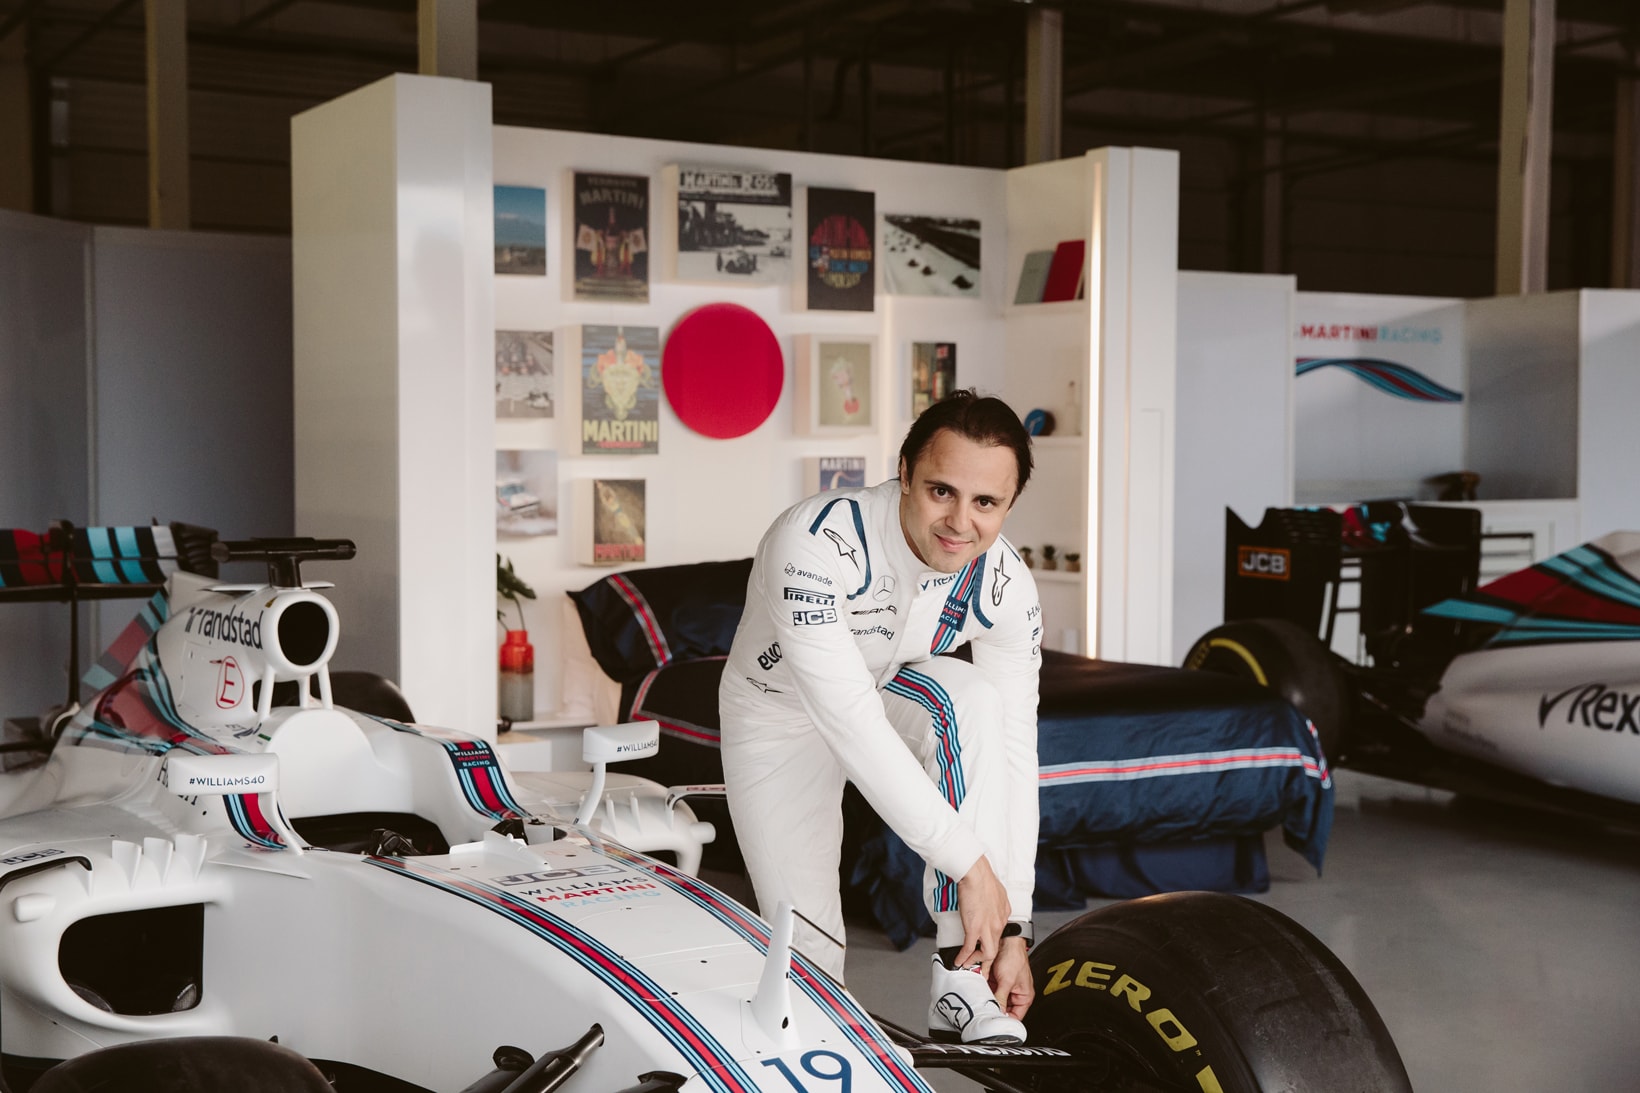 Williams Martini Racing Garage Airbnb Contest British Grand Prix Silverstone